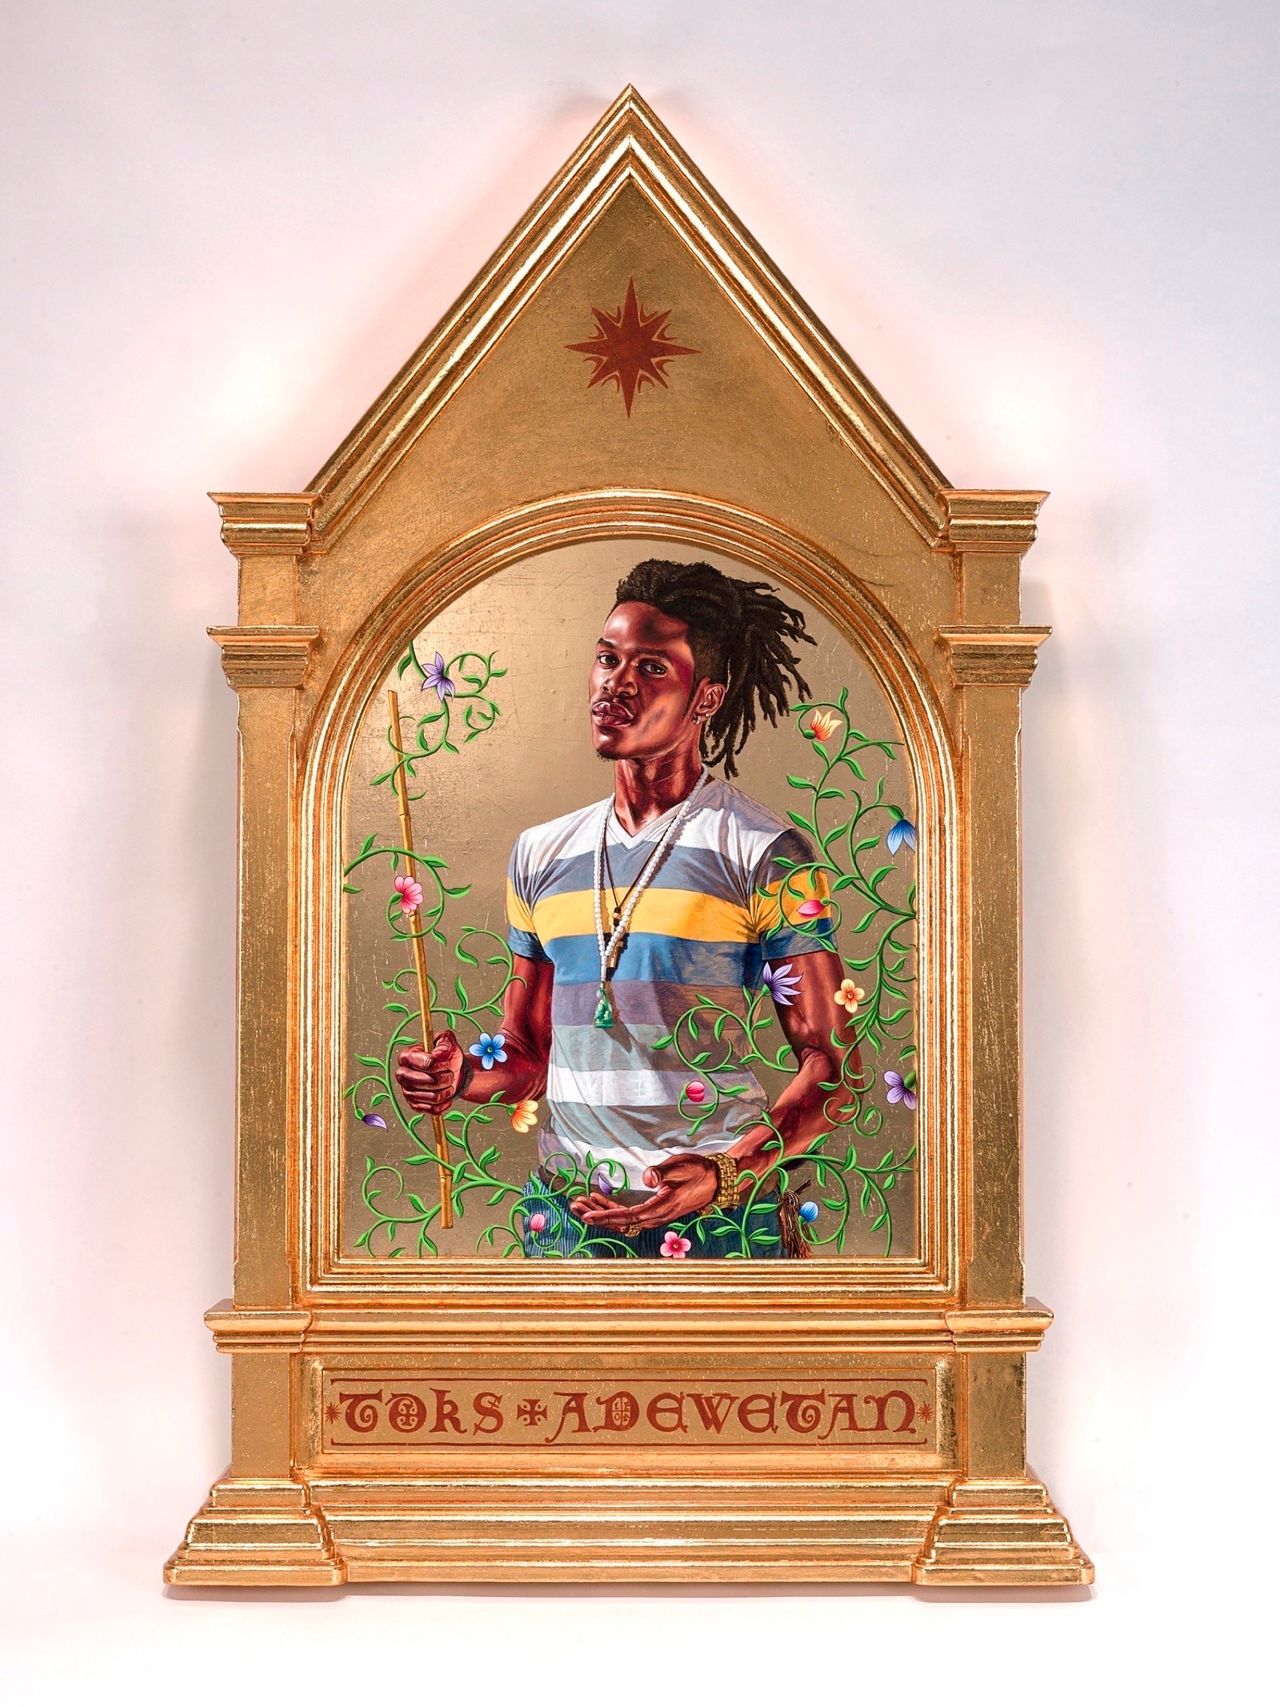 Kehinde Wiley, "The Archangel Gabriel," 2014/ 22 karat gold leaf and oil on wood panel